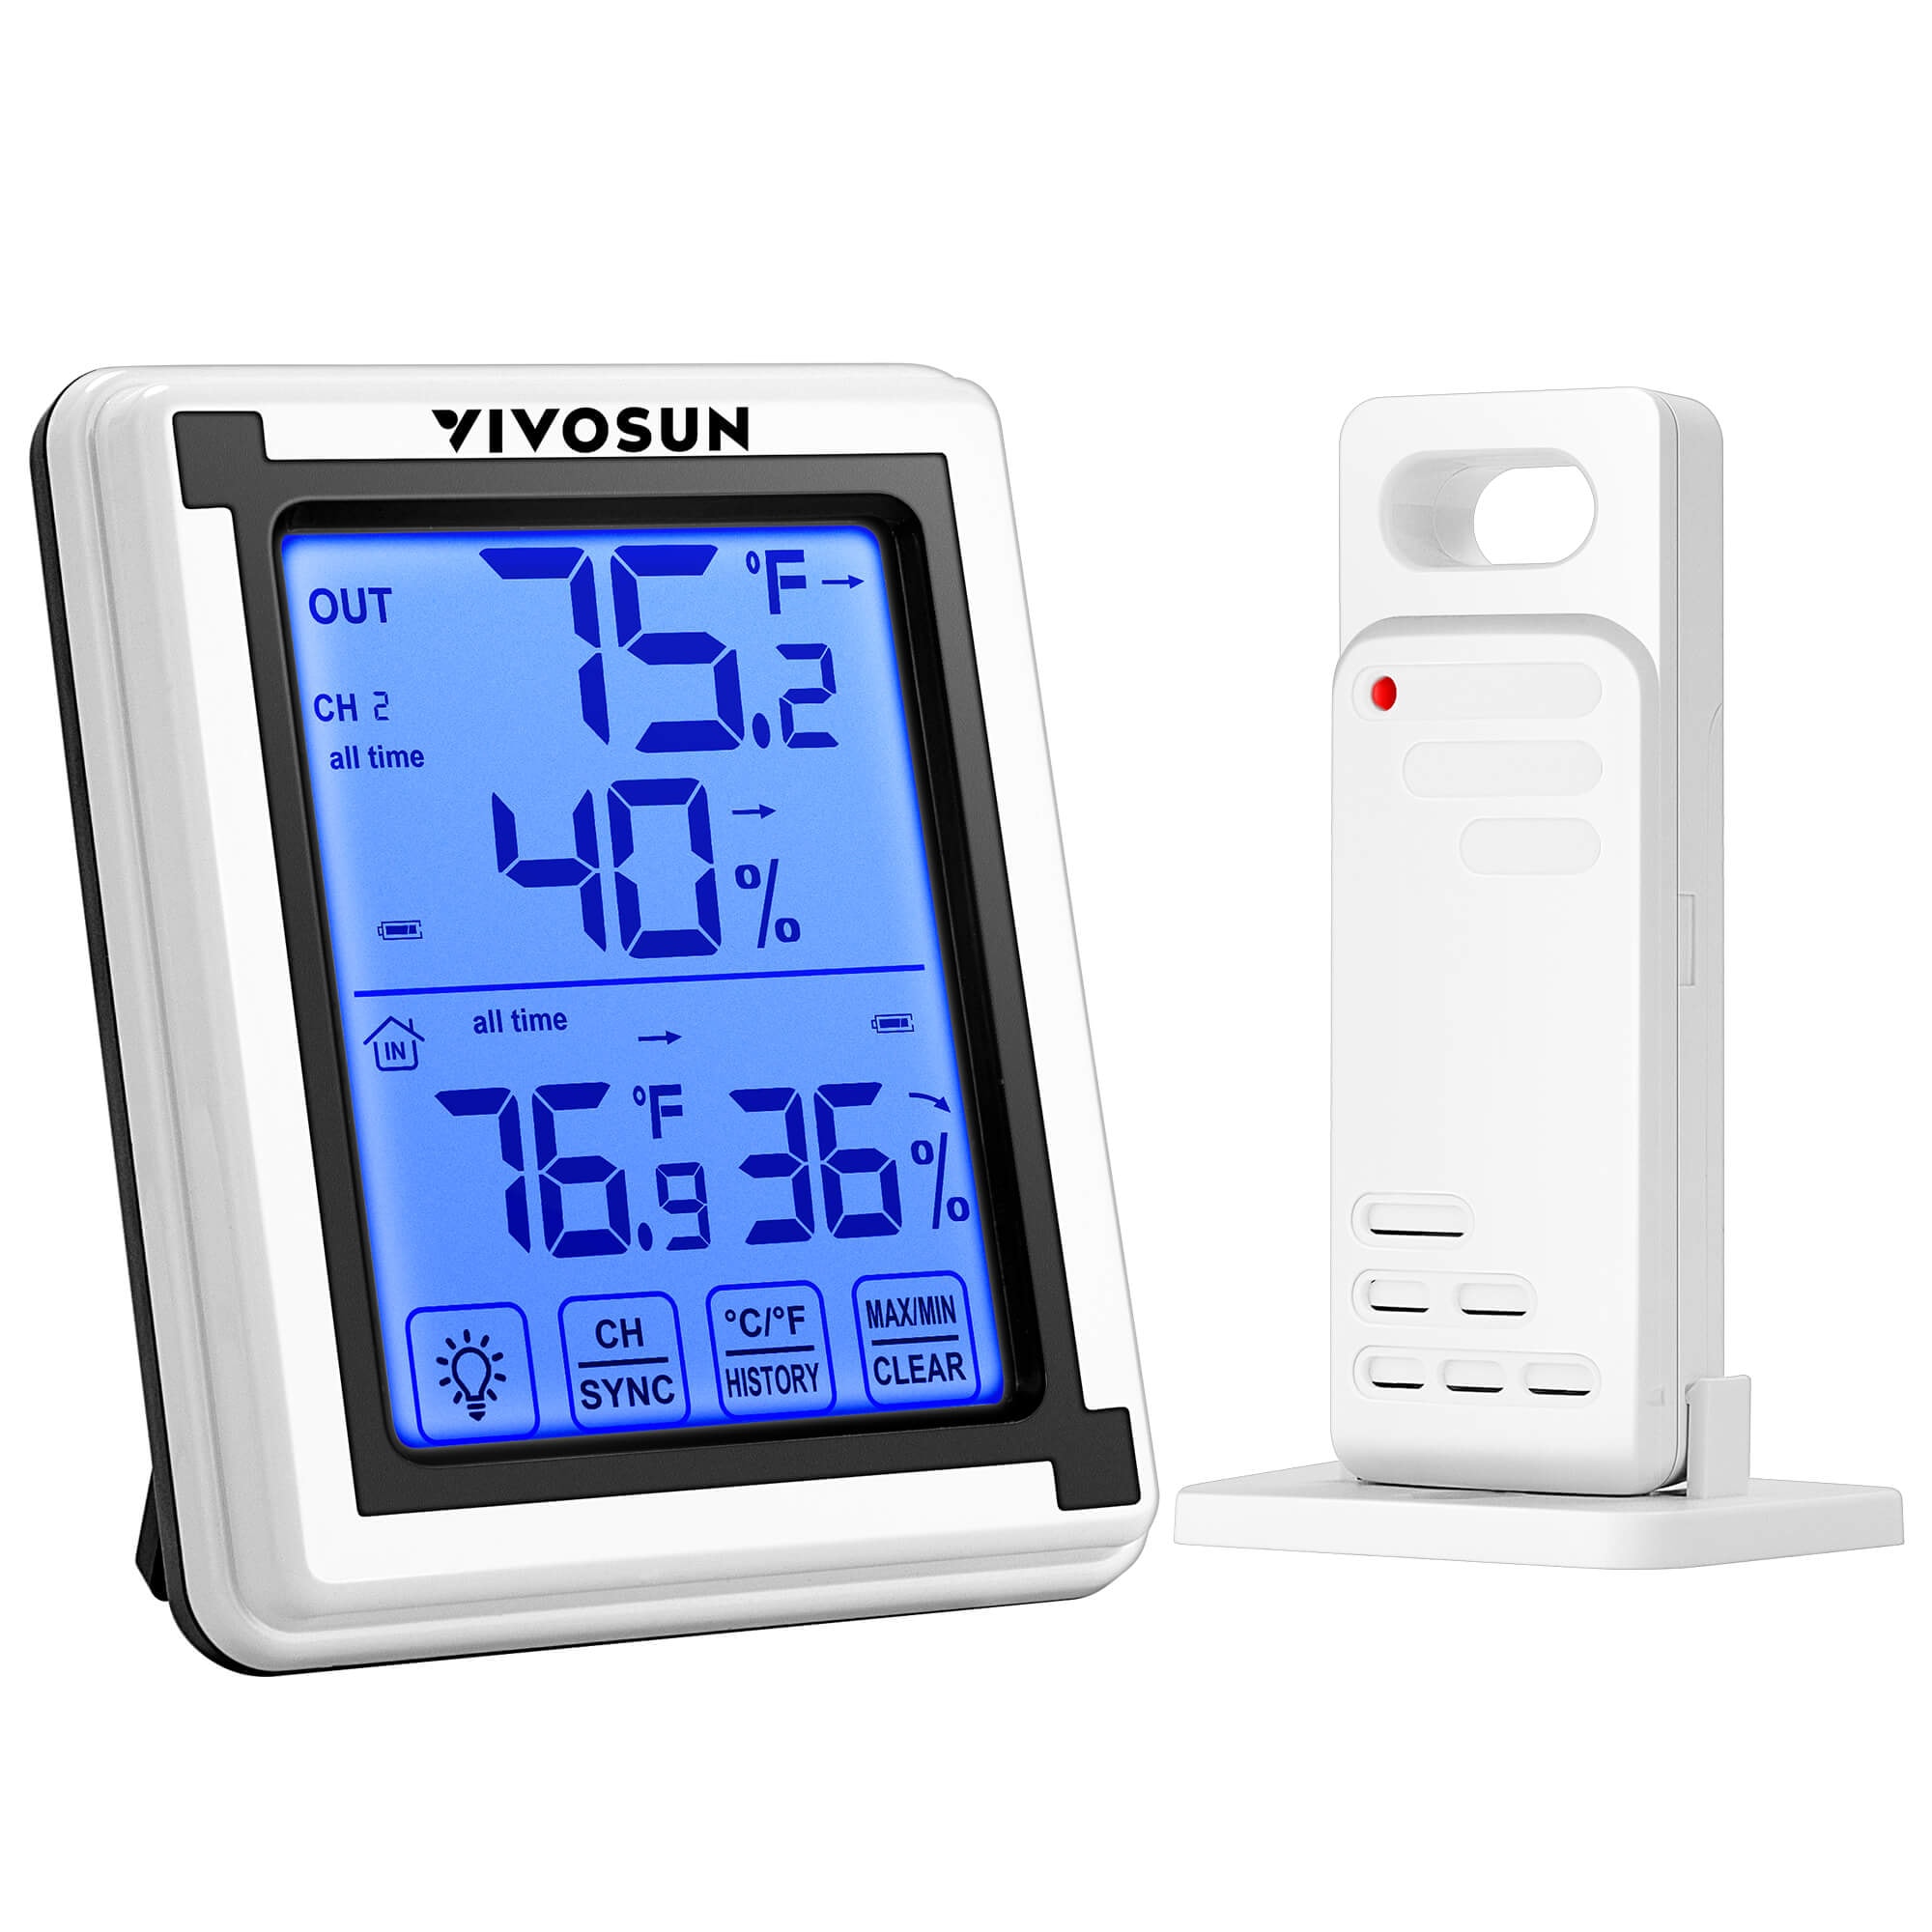 wireless thermometer, wireless hygrometer, wireless hygronom